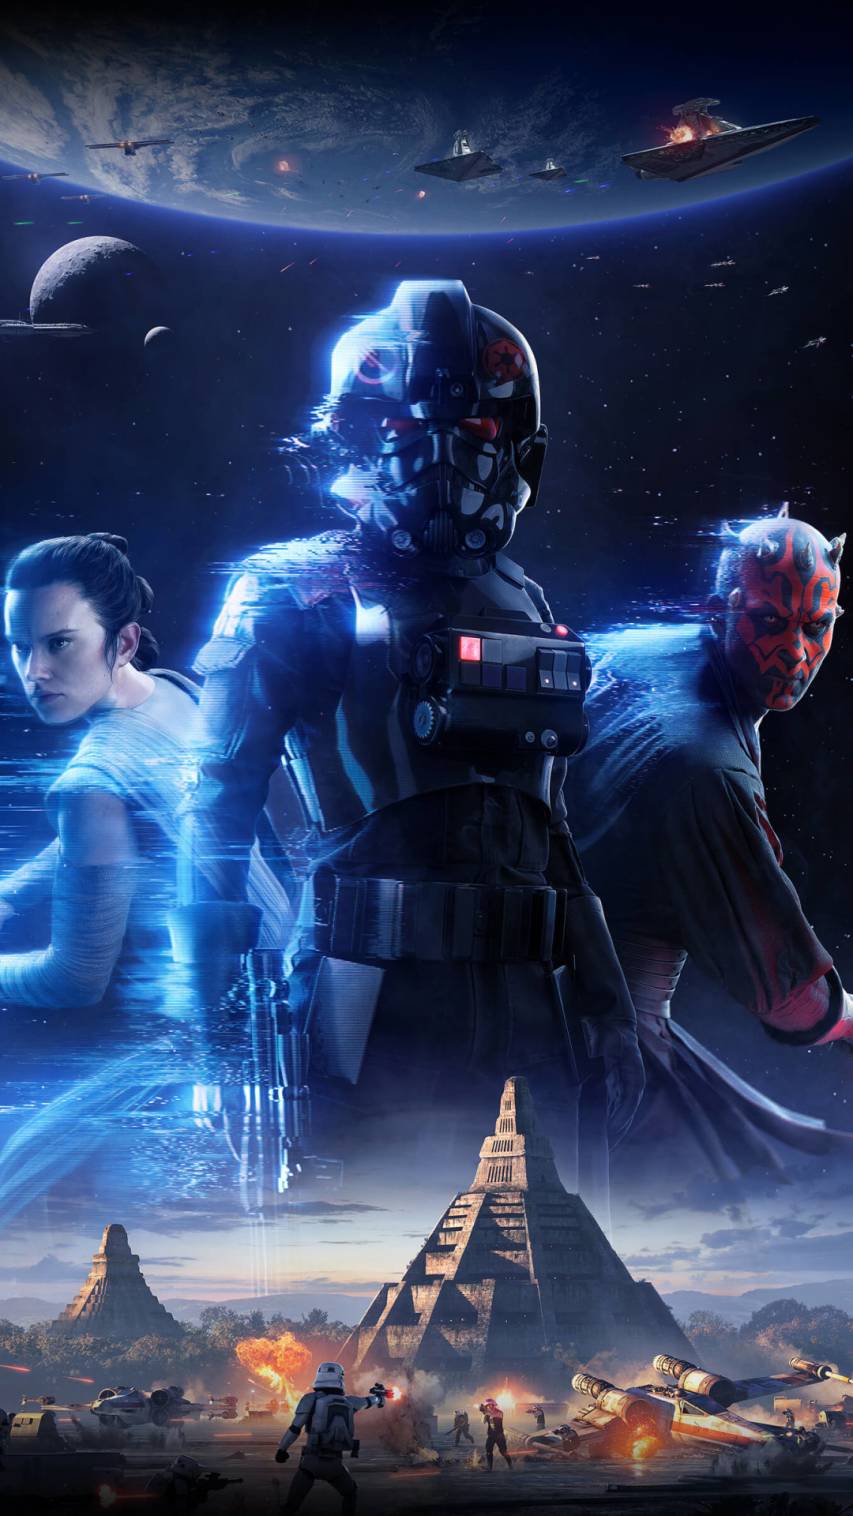 Star wars battlefront ii poster - Star Wars